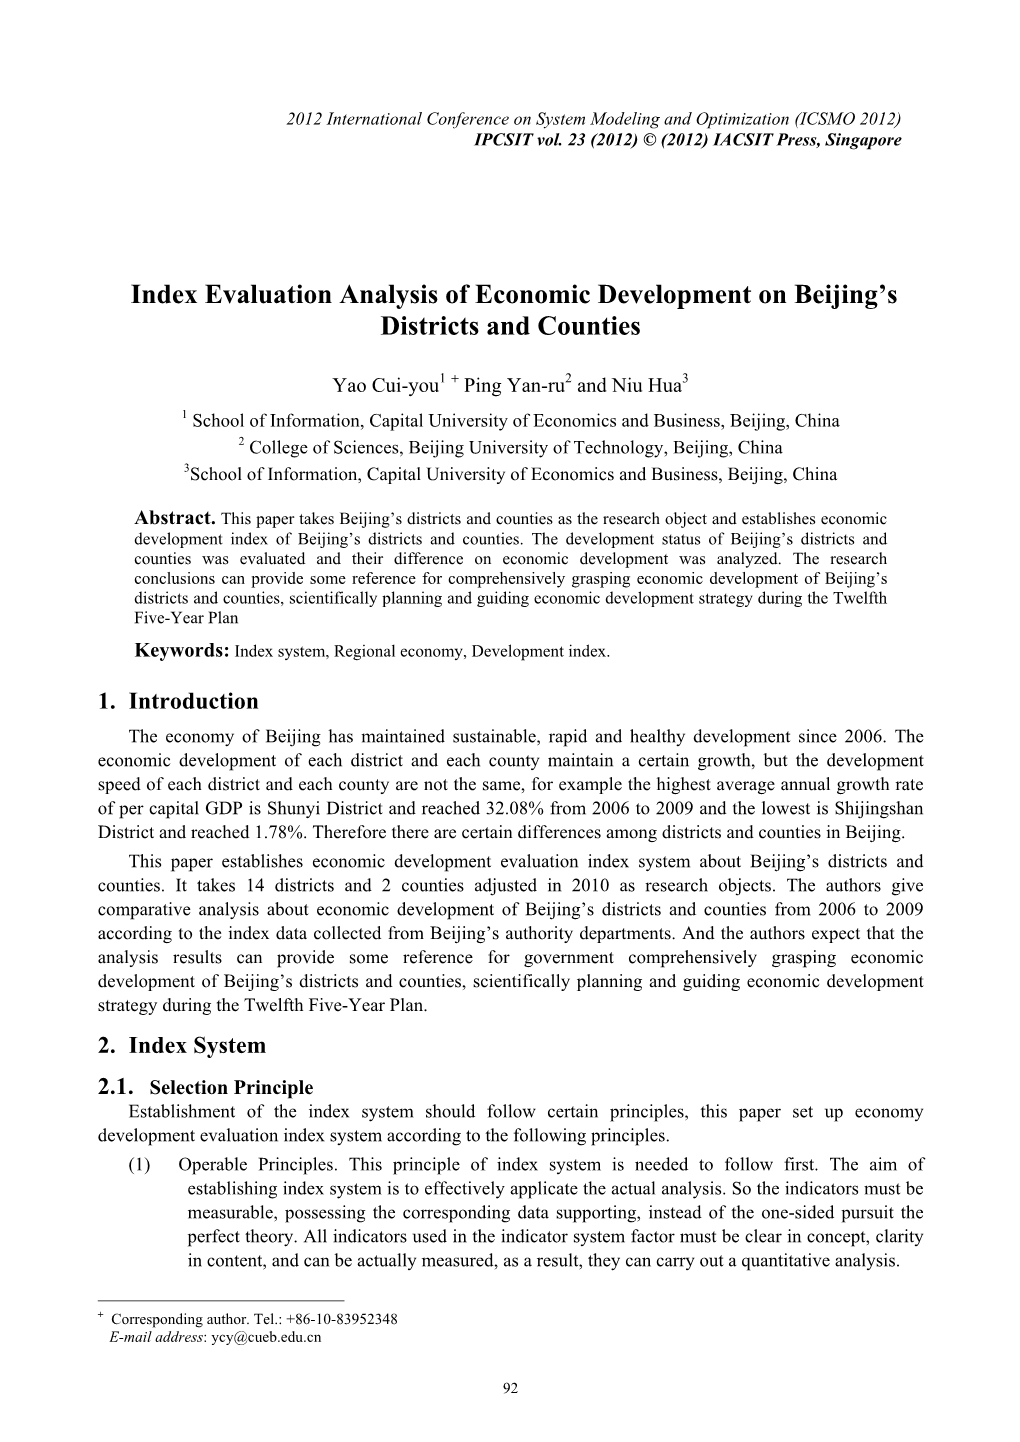 Evaluation Analysis of Economic Development on Beijing's Districts